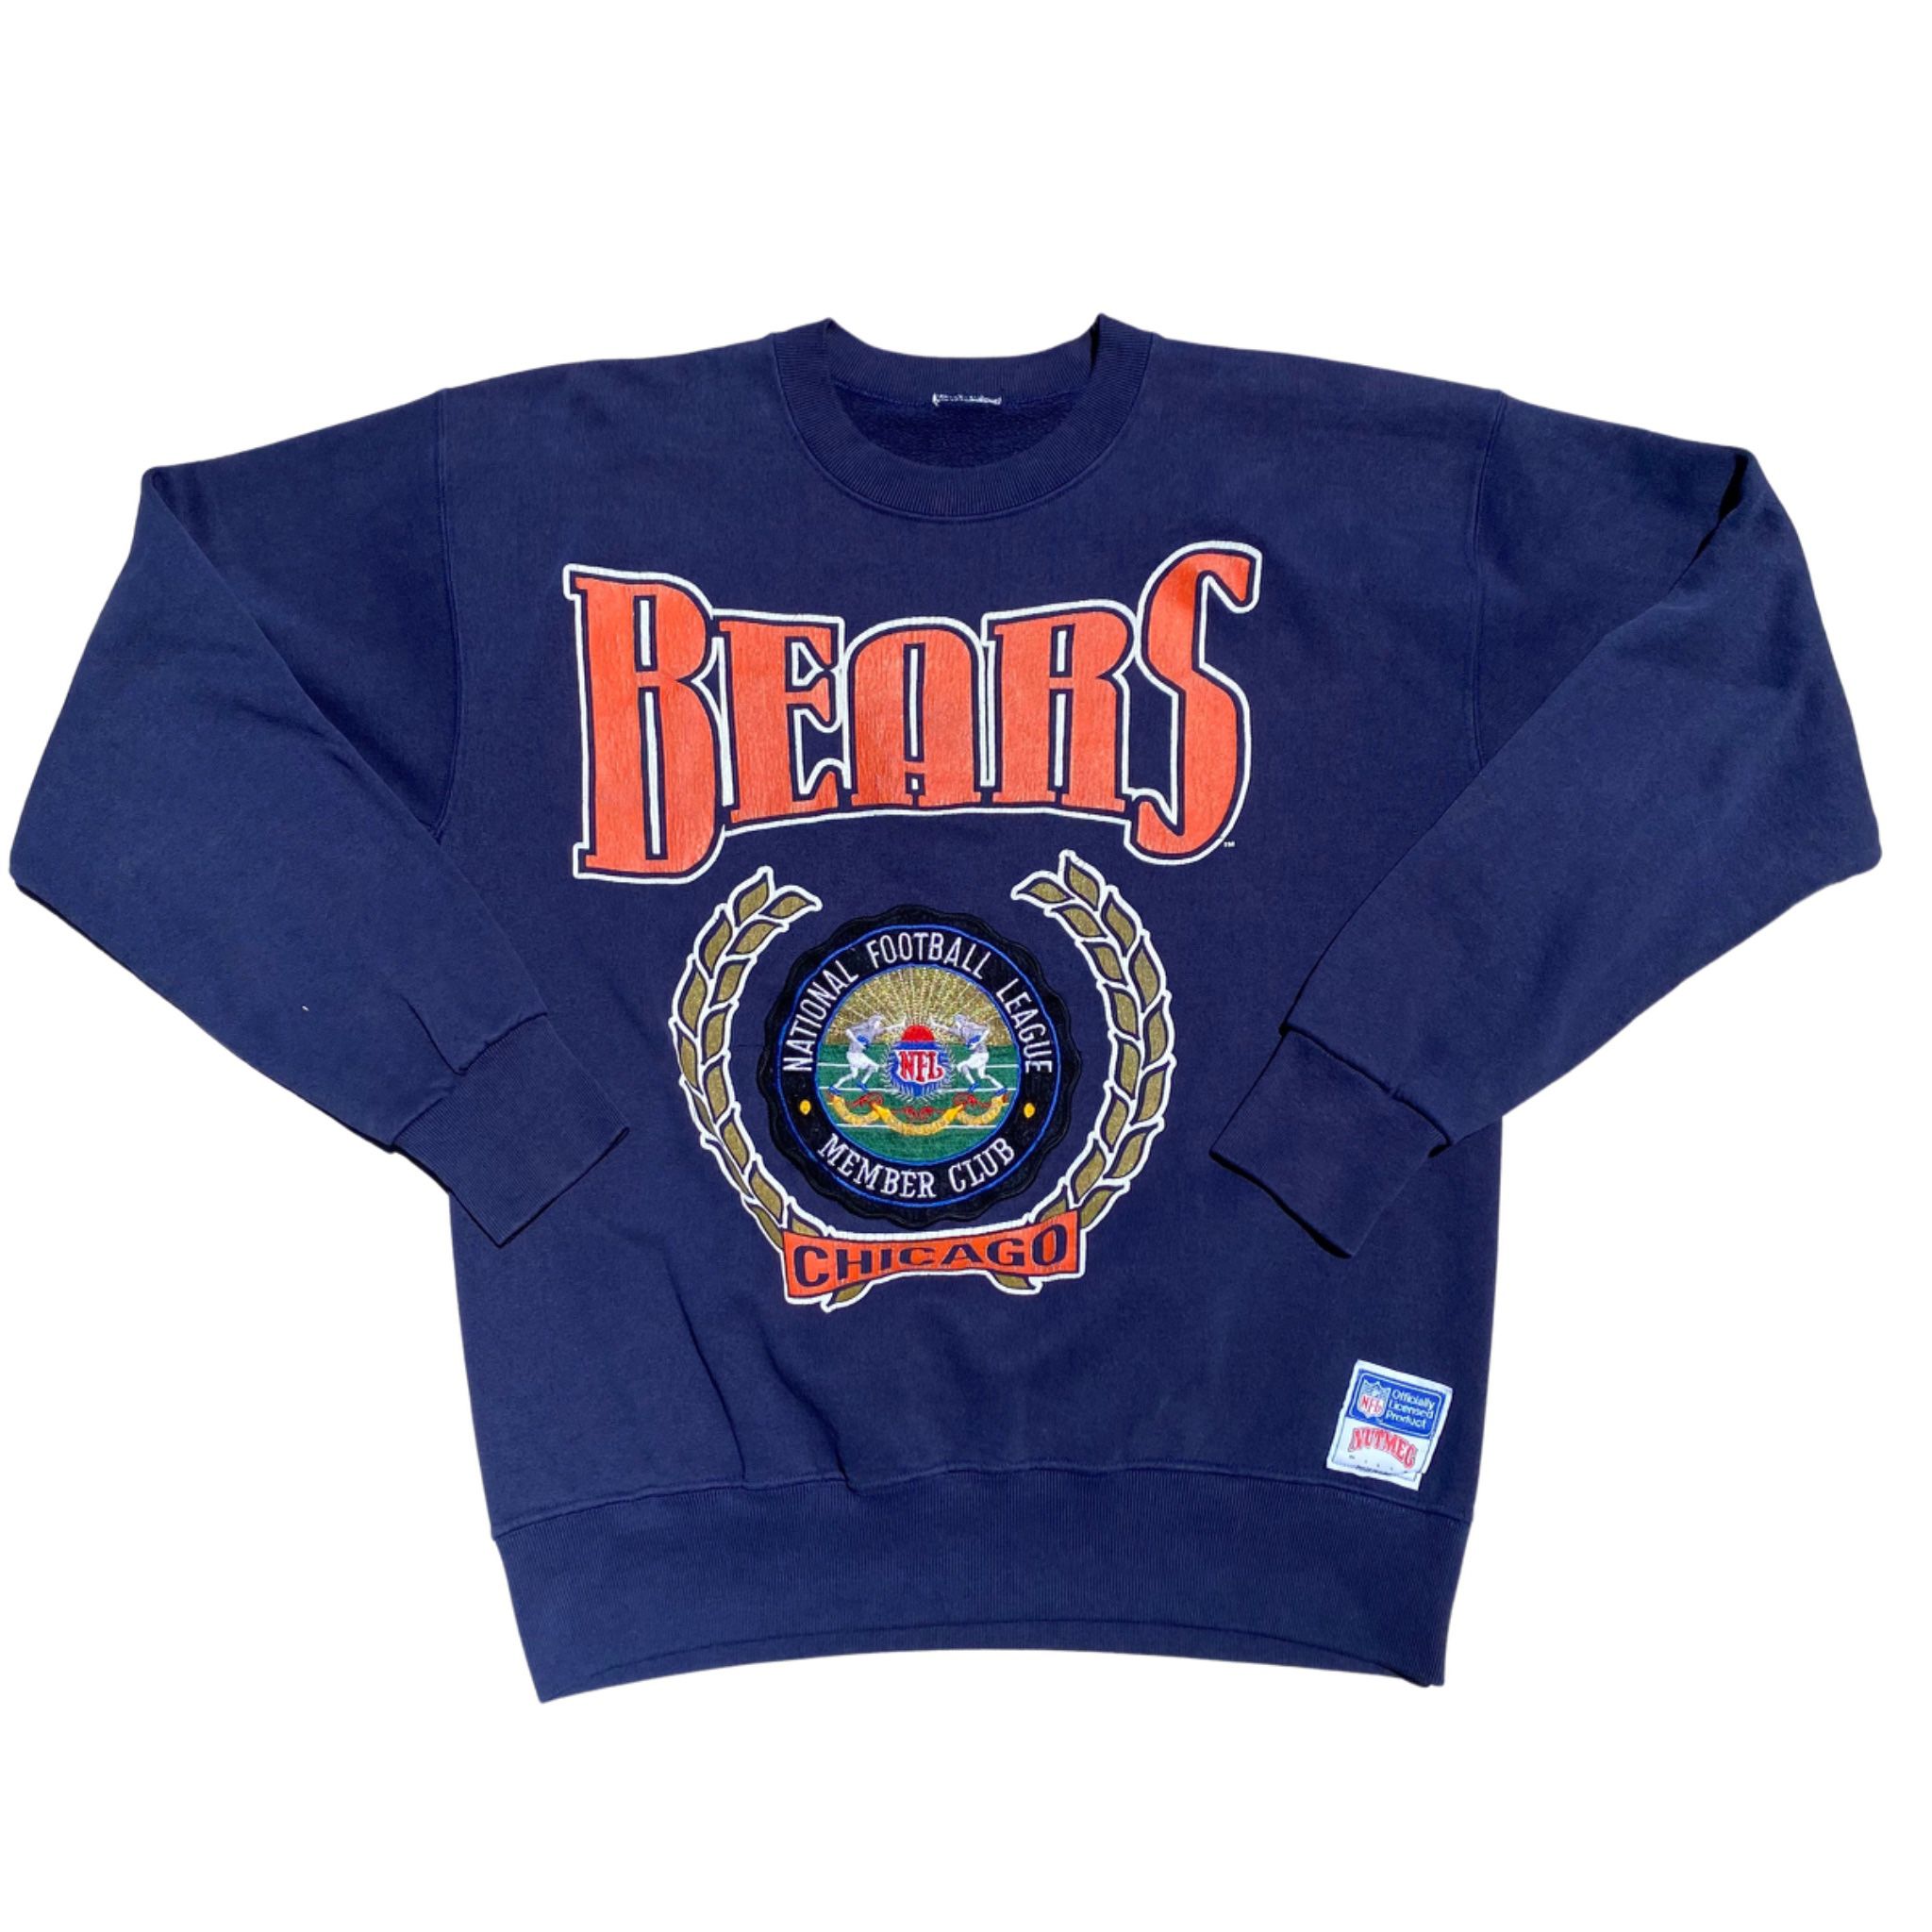 Vintage Chicago Bears Crewneck Sweatshirt Size Large 